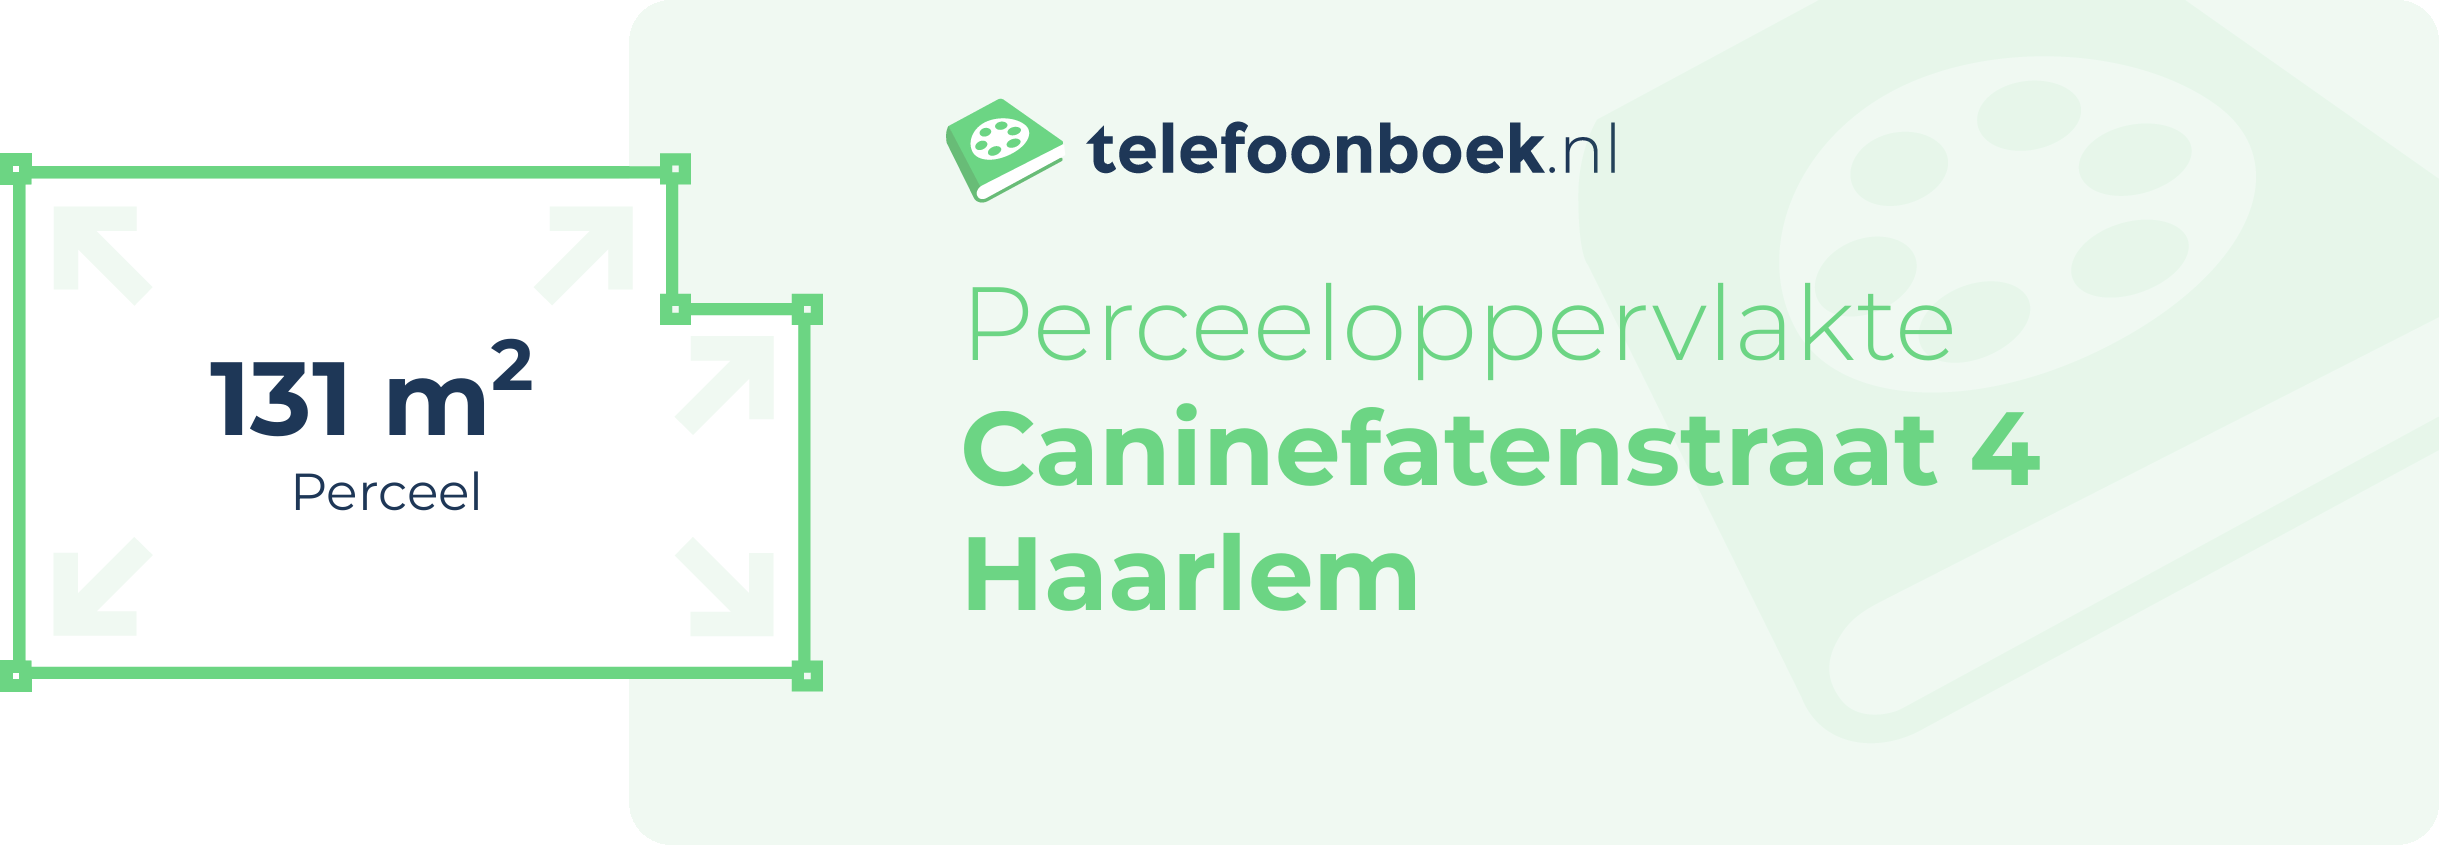 Perceeloppervlakte Caninefatenstraat 4 Haarlem